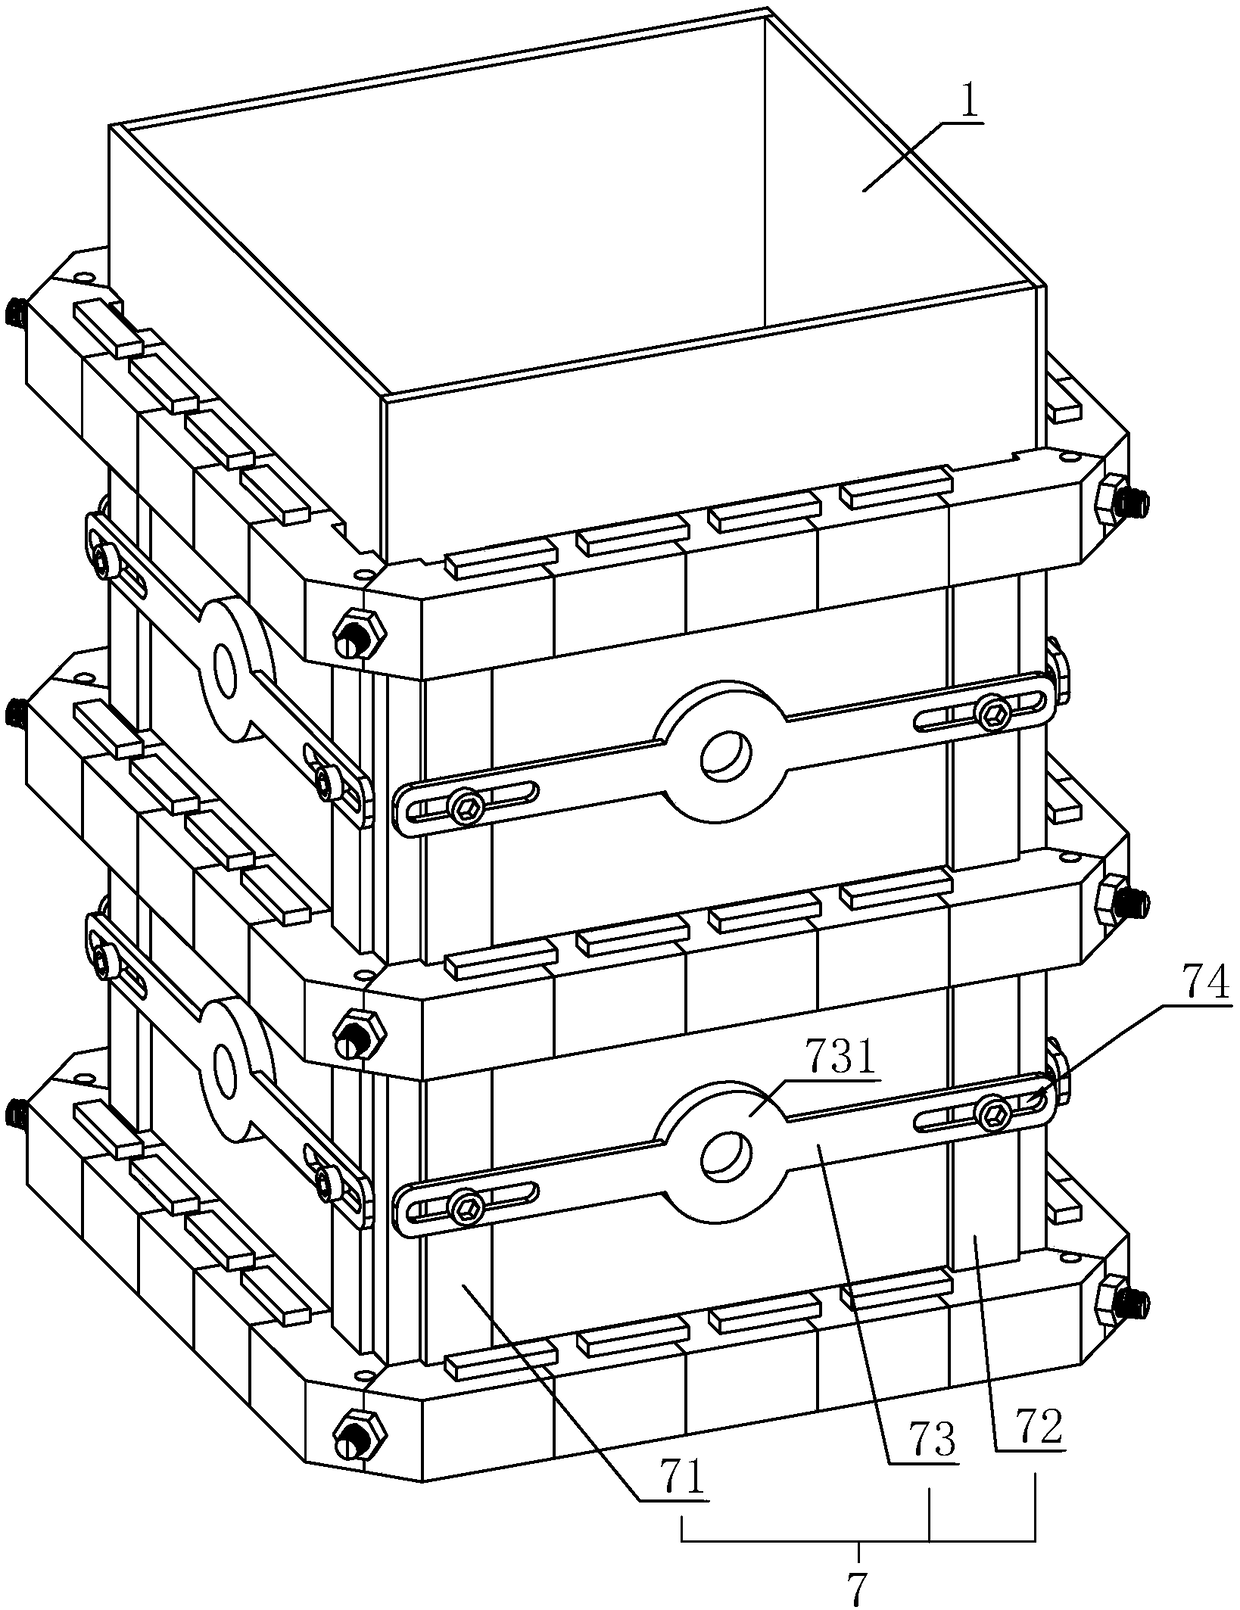 Tightening system of concrete rectangular column formwork and construction method of concrete column